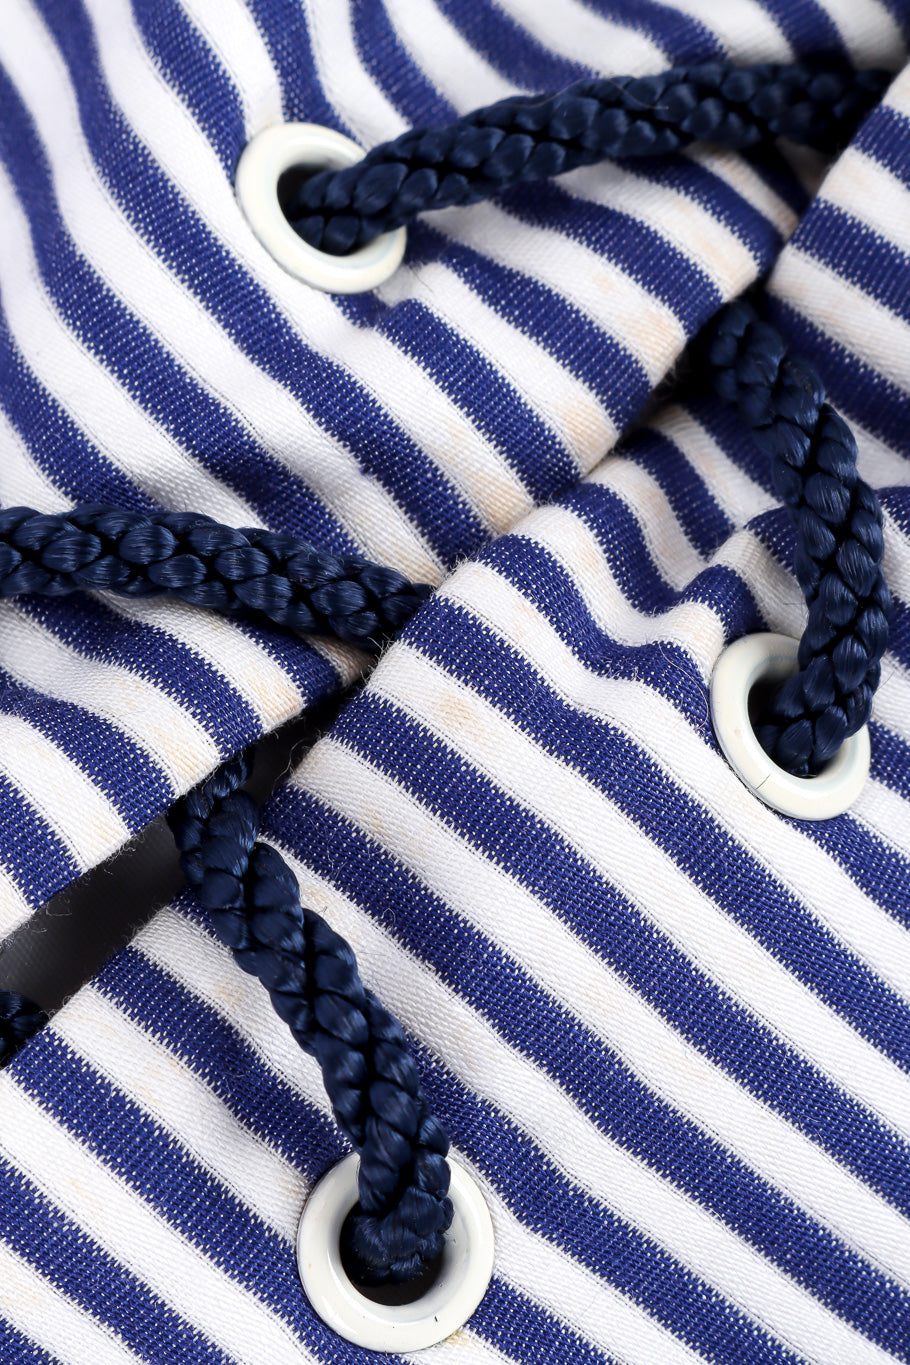 Vintage Yves Saint Laurent Sailor Stripe Corset Dress small stain between front ties closeup @Recessla